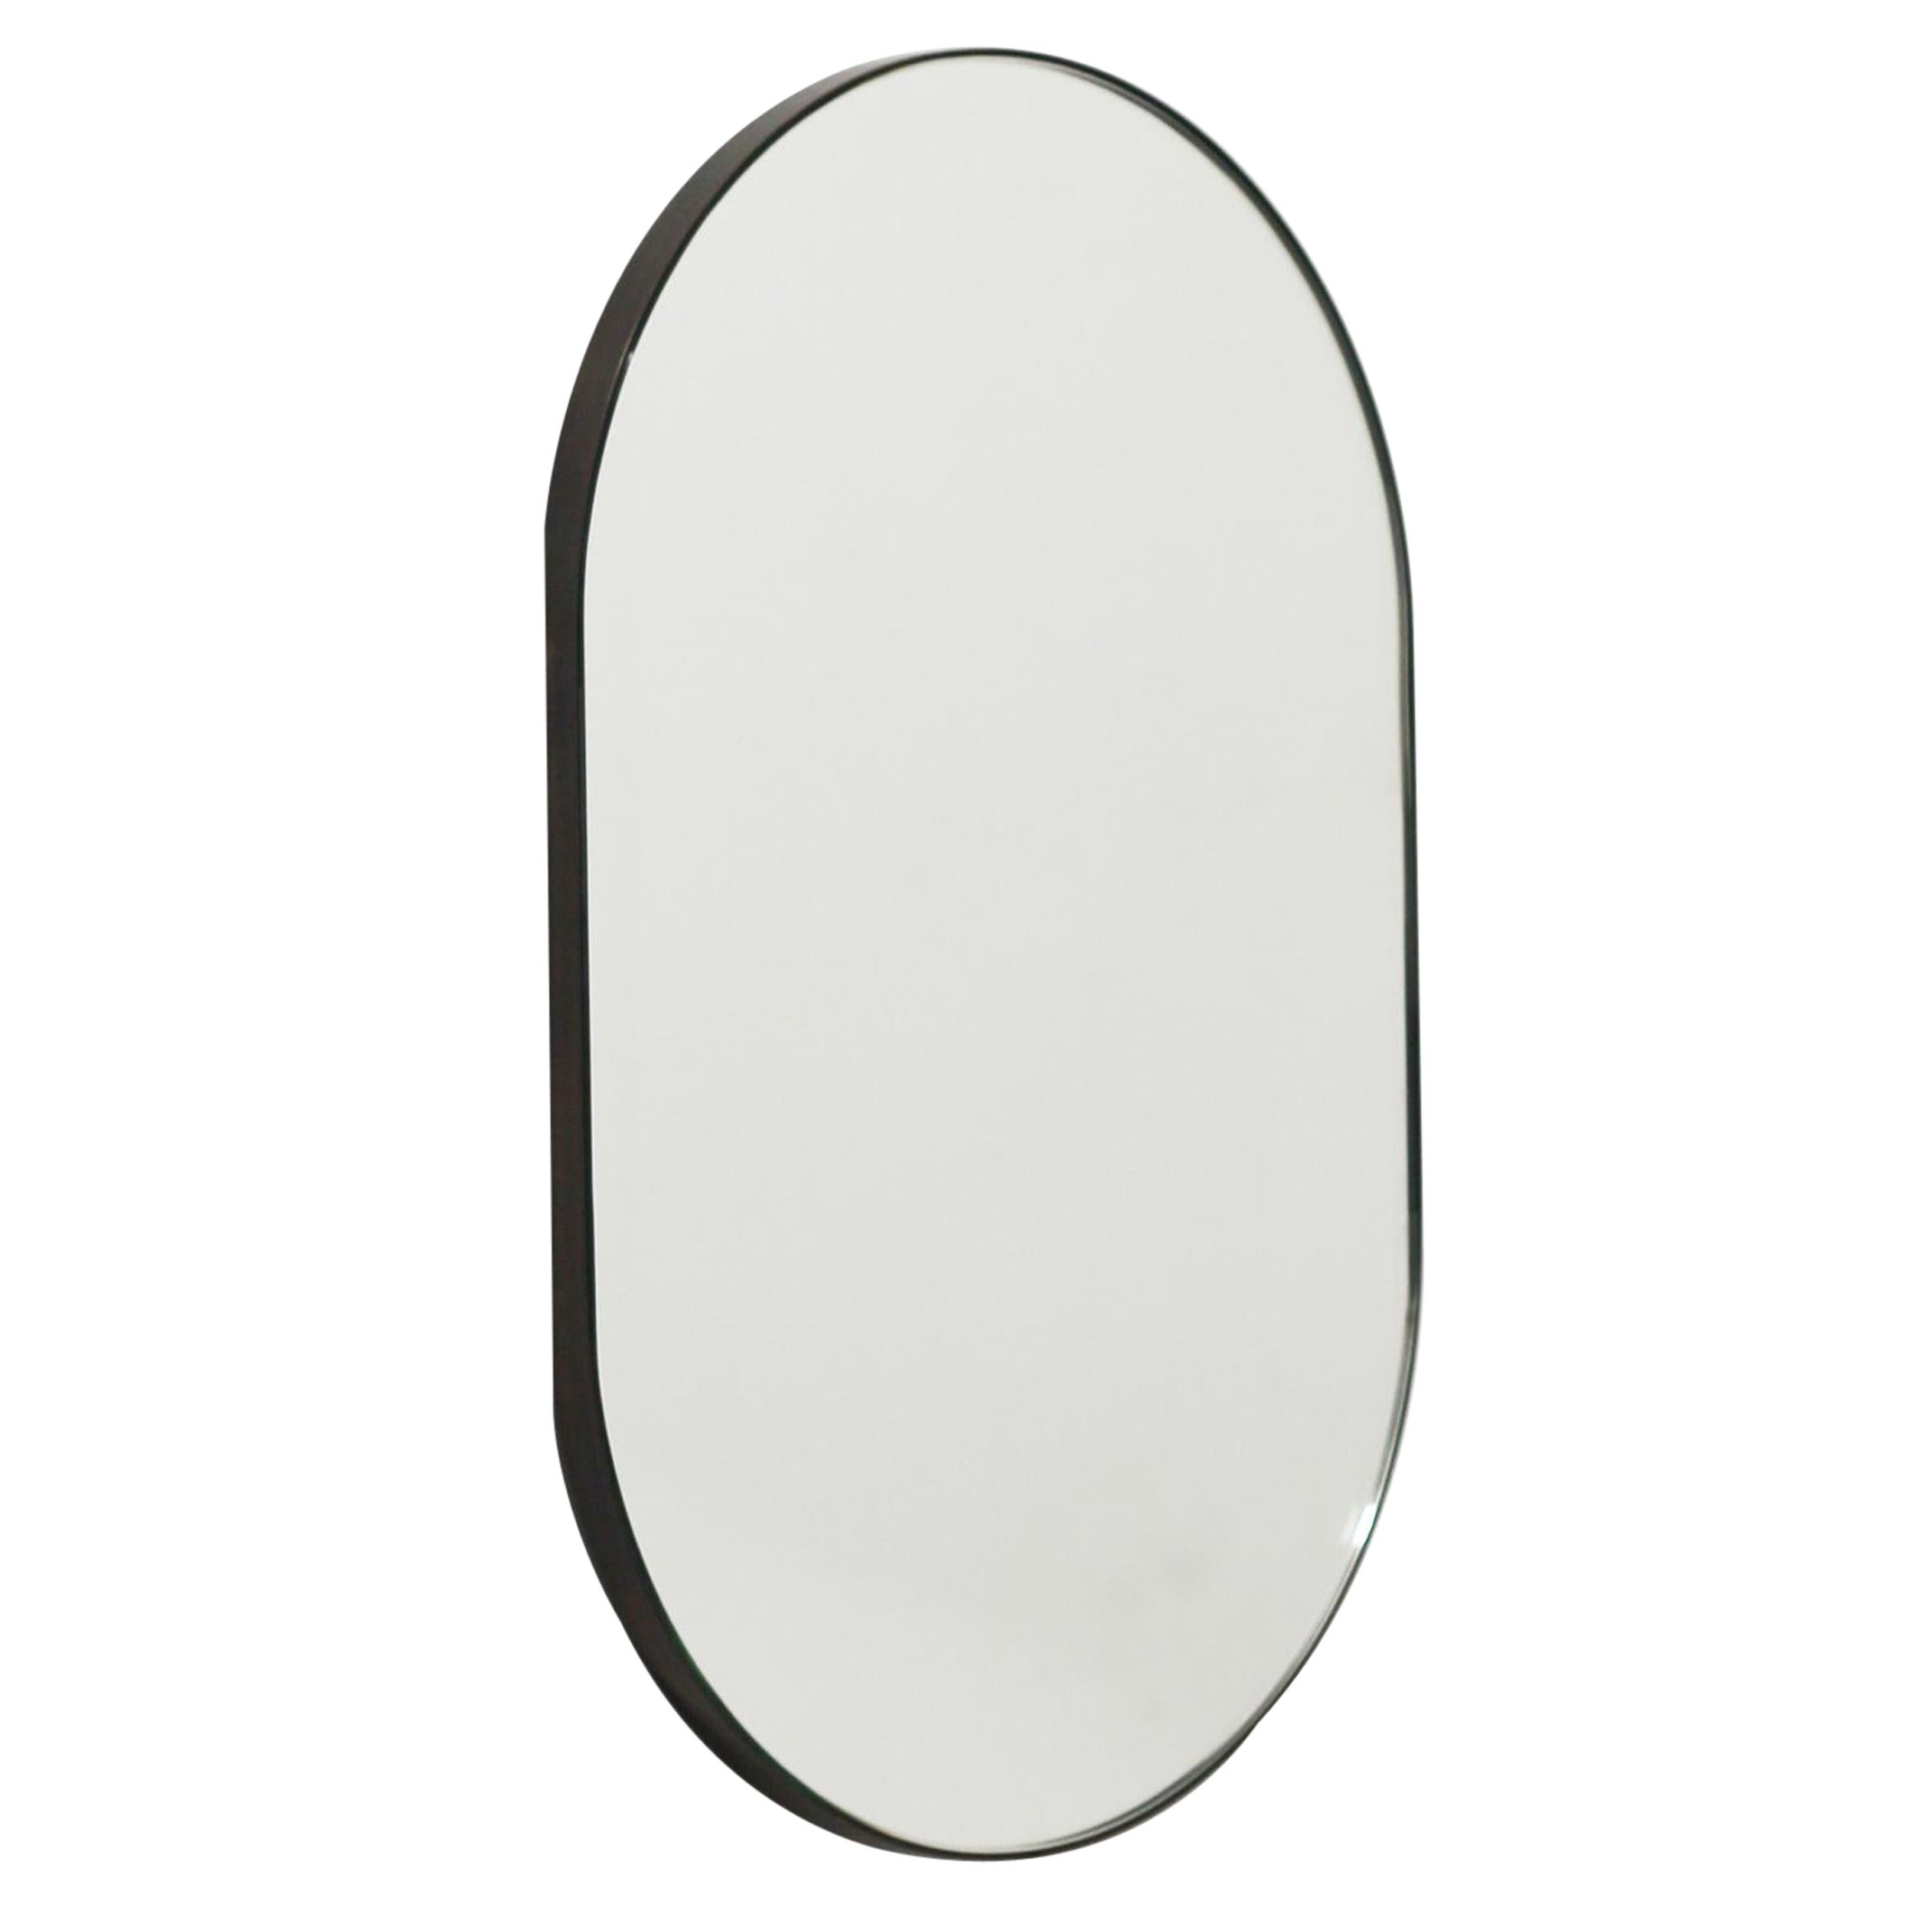 Capsula Capsule shaped Customisable Mirror with Patina Frame, Oversized